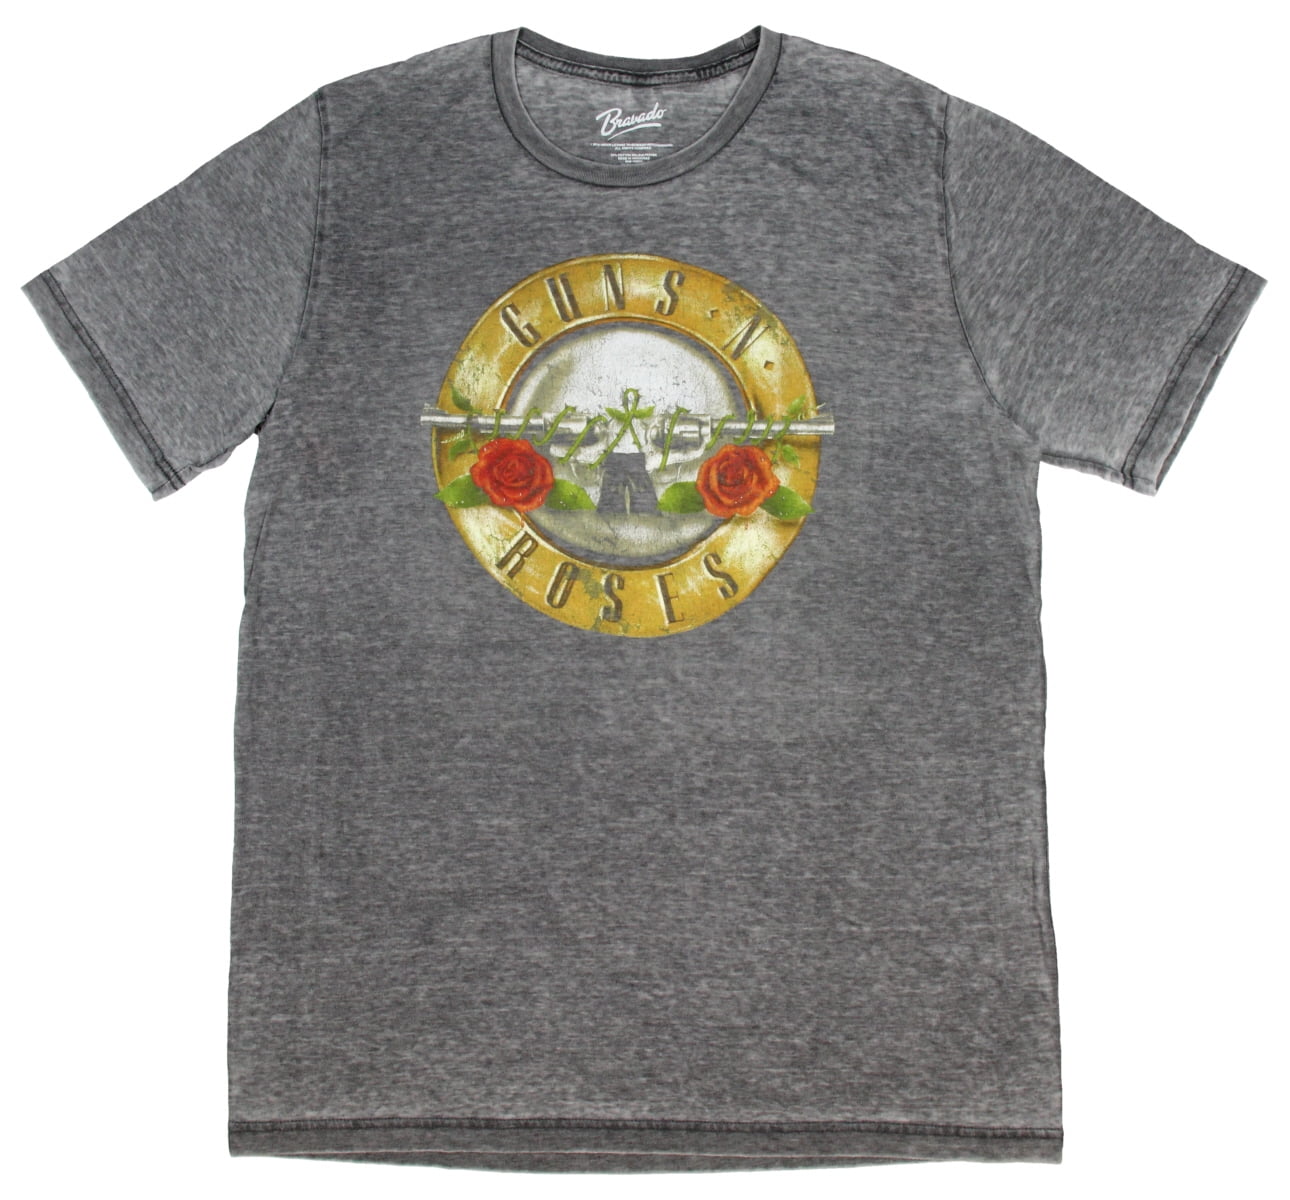 Guns N' Roses 'Faded Skull' Burnout T-Shirt Blue NEW & OFFICIAL!